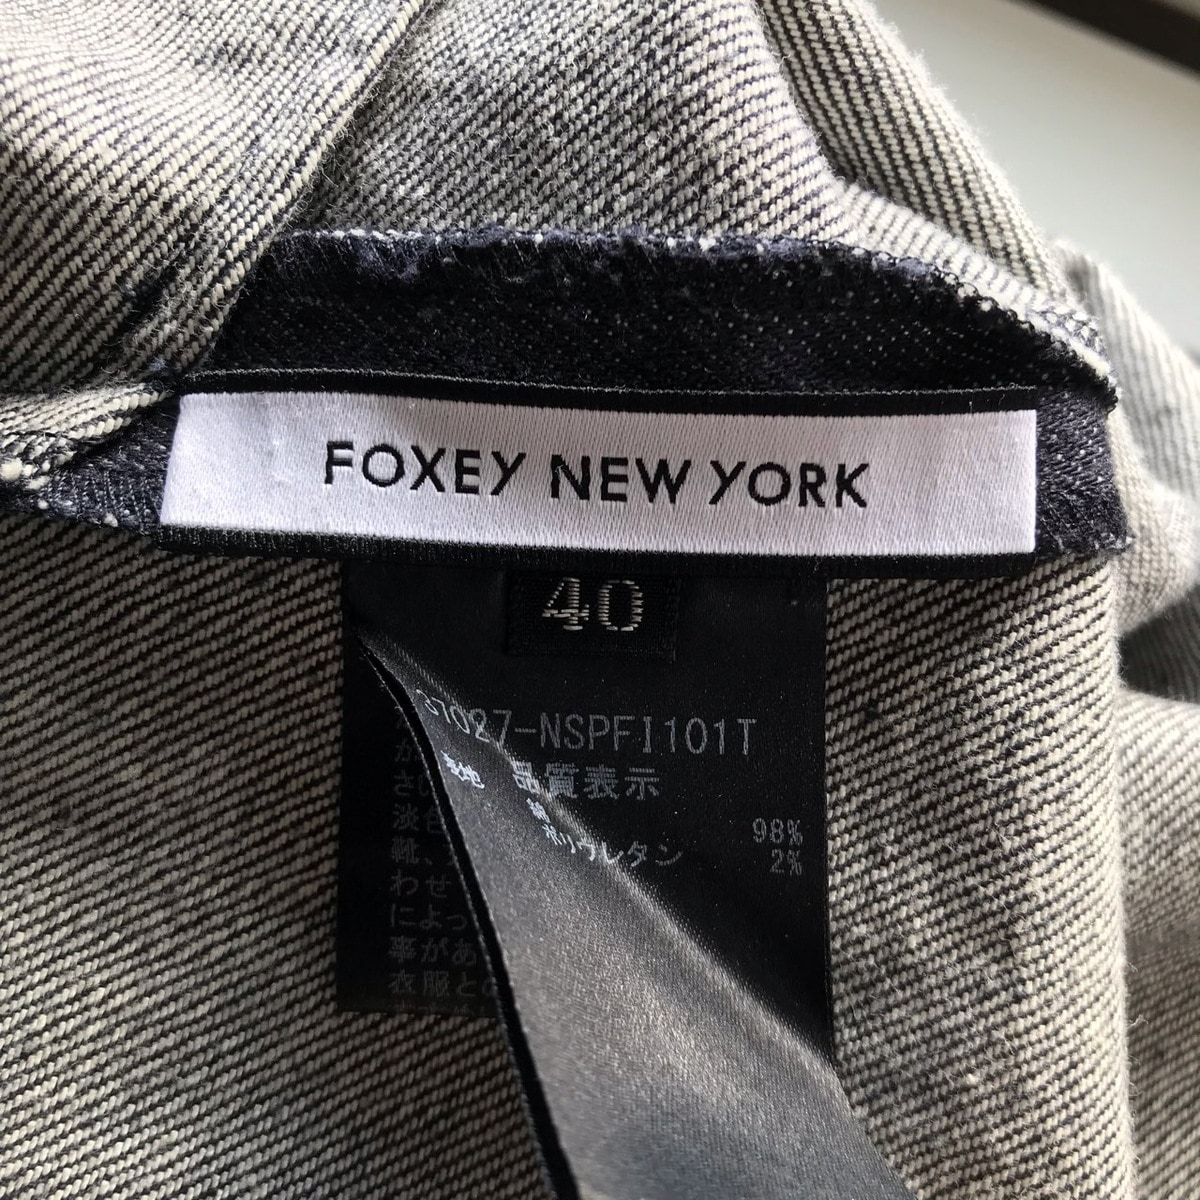 FOXEY NEW YORK(フォクシーニューヨーク) ジーンズ サイズ40 M